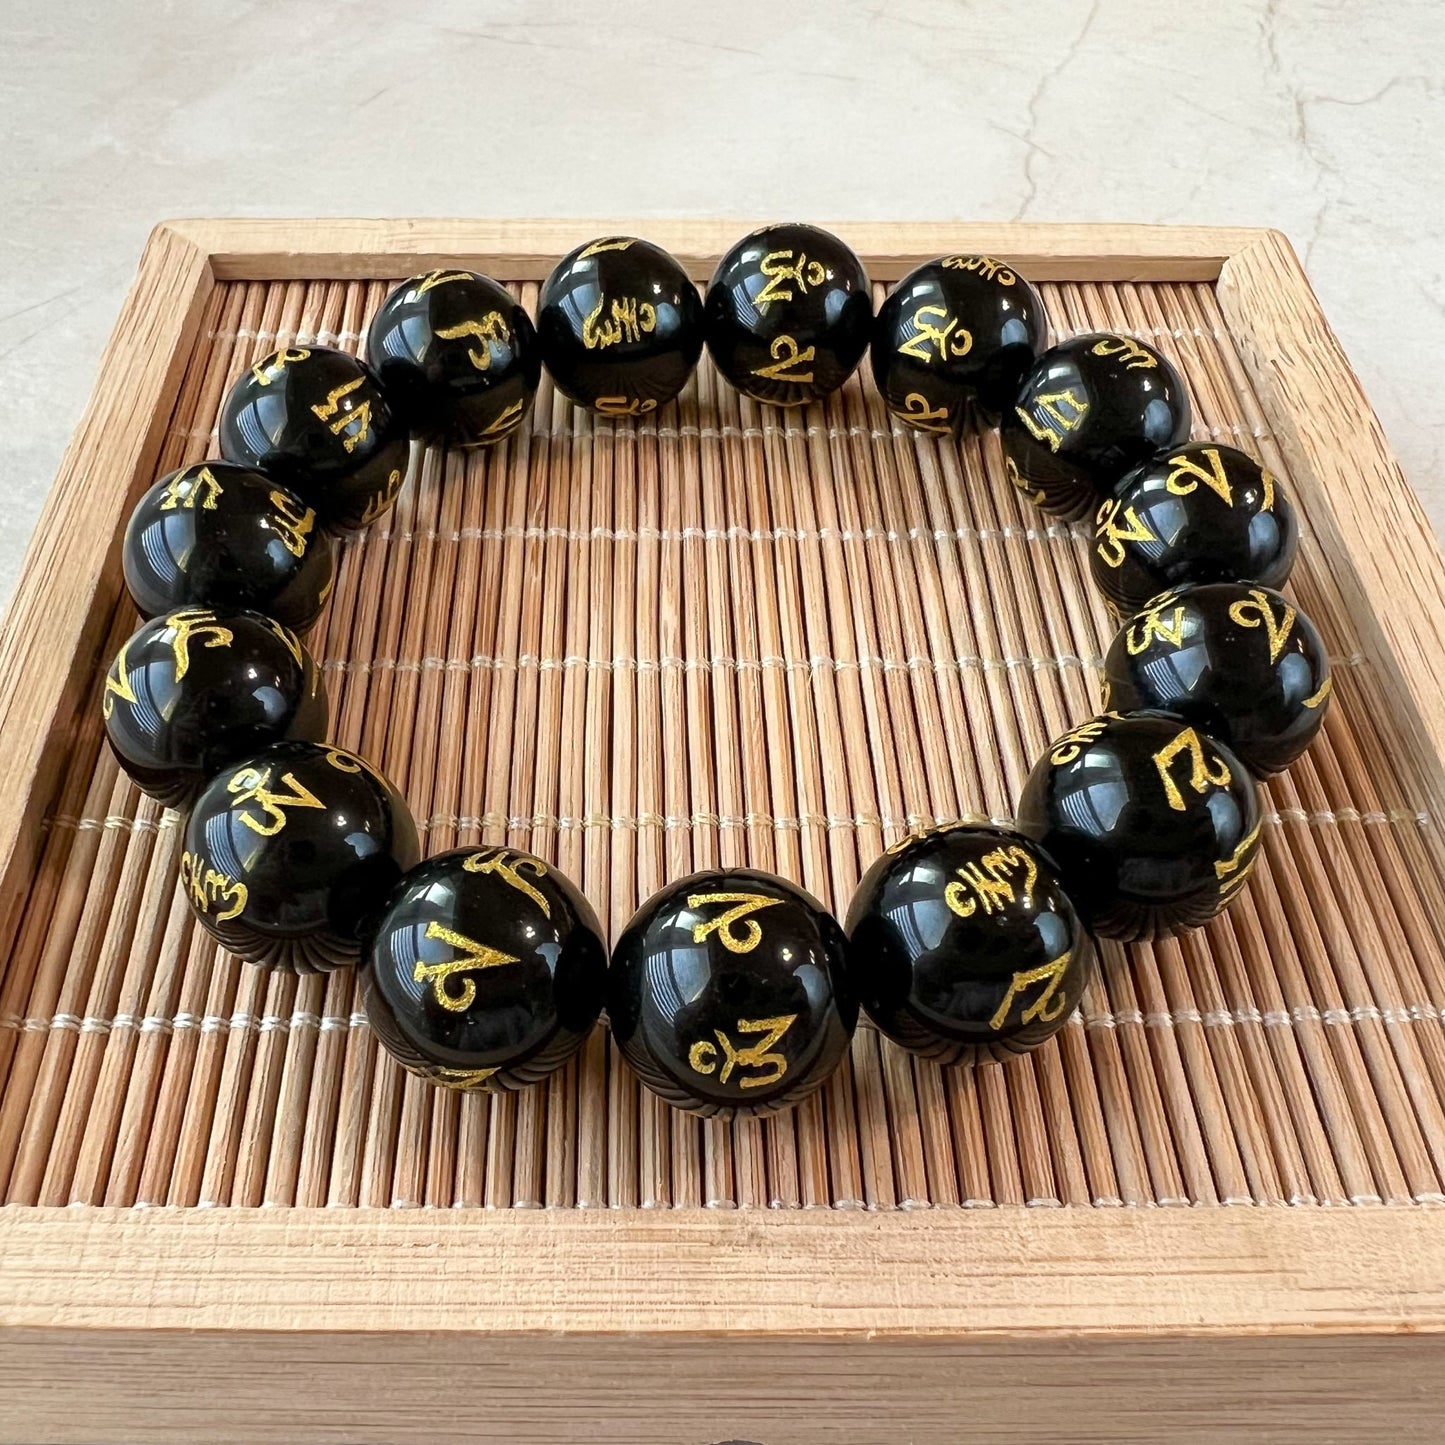 Om mani padme hum Mantra, Black Obsidian Prayer Beads Bracelet Necklace, 14 mm, Avalokitesvara mantra, RLXE-0123-1679111173